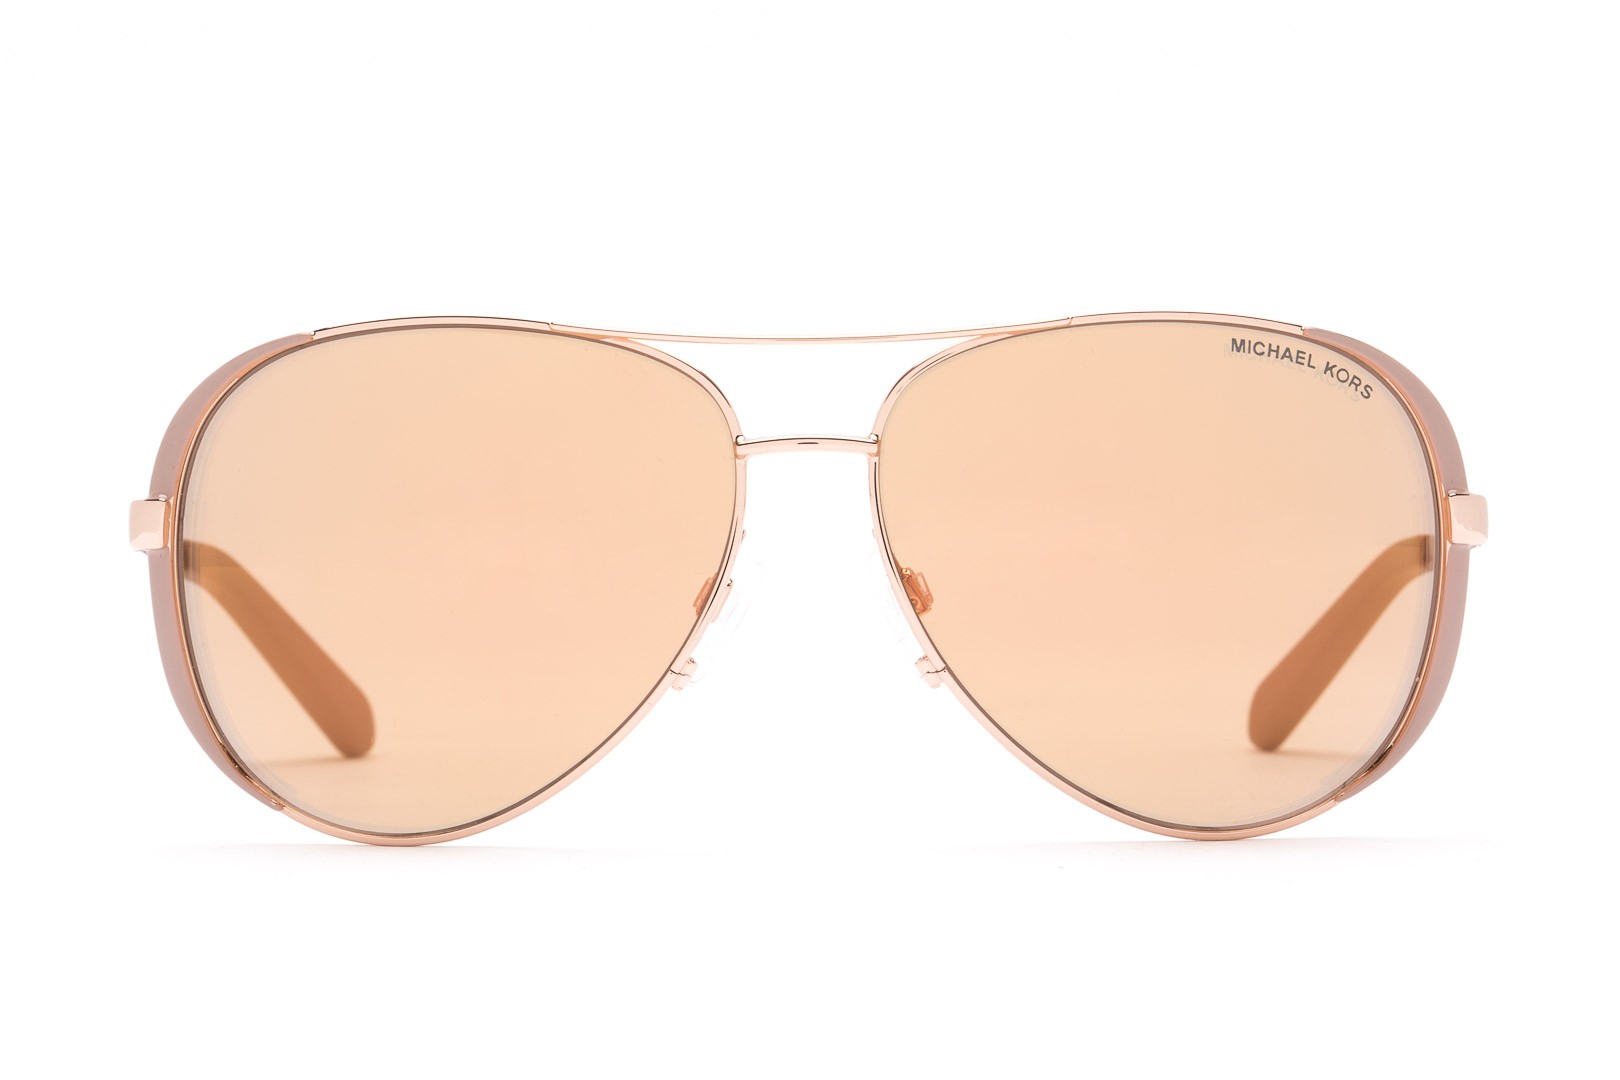 Amazoncom Michael Kors MK5004 Chelsea Sunglasses Rose Gold  Clothing  Shoes  Jewelry